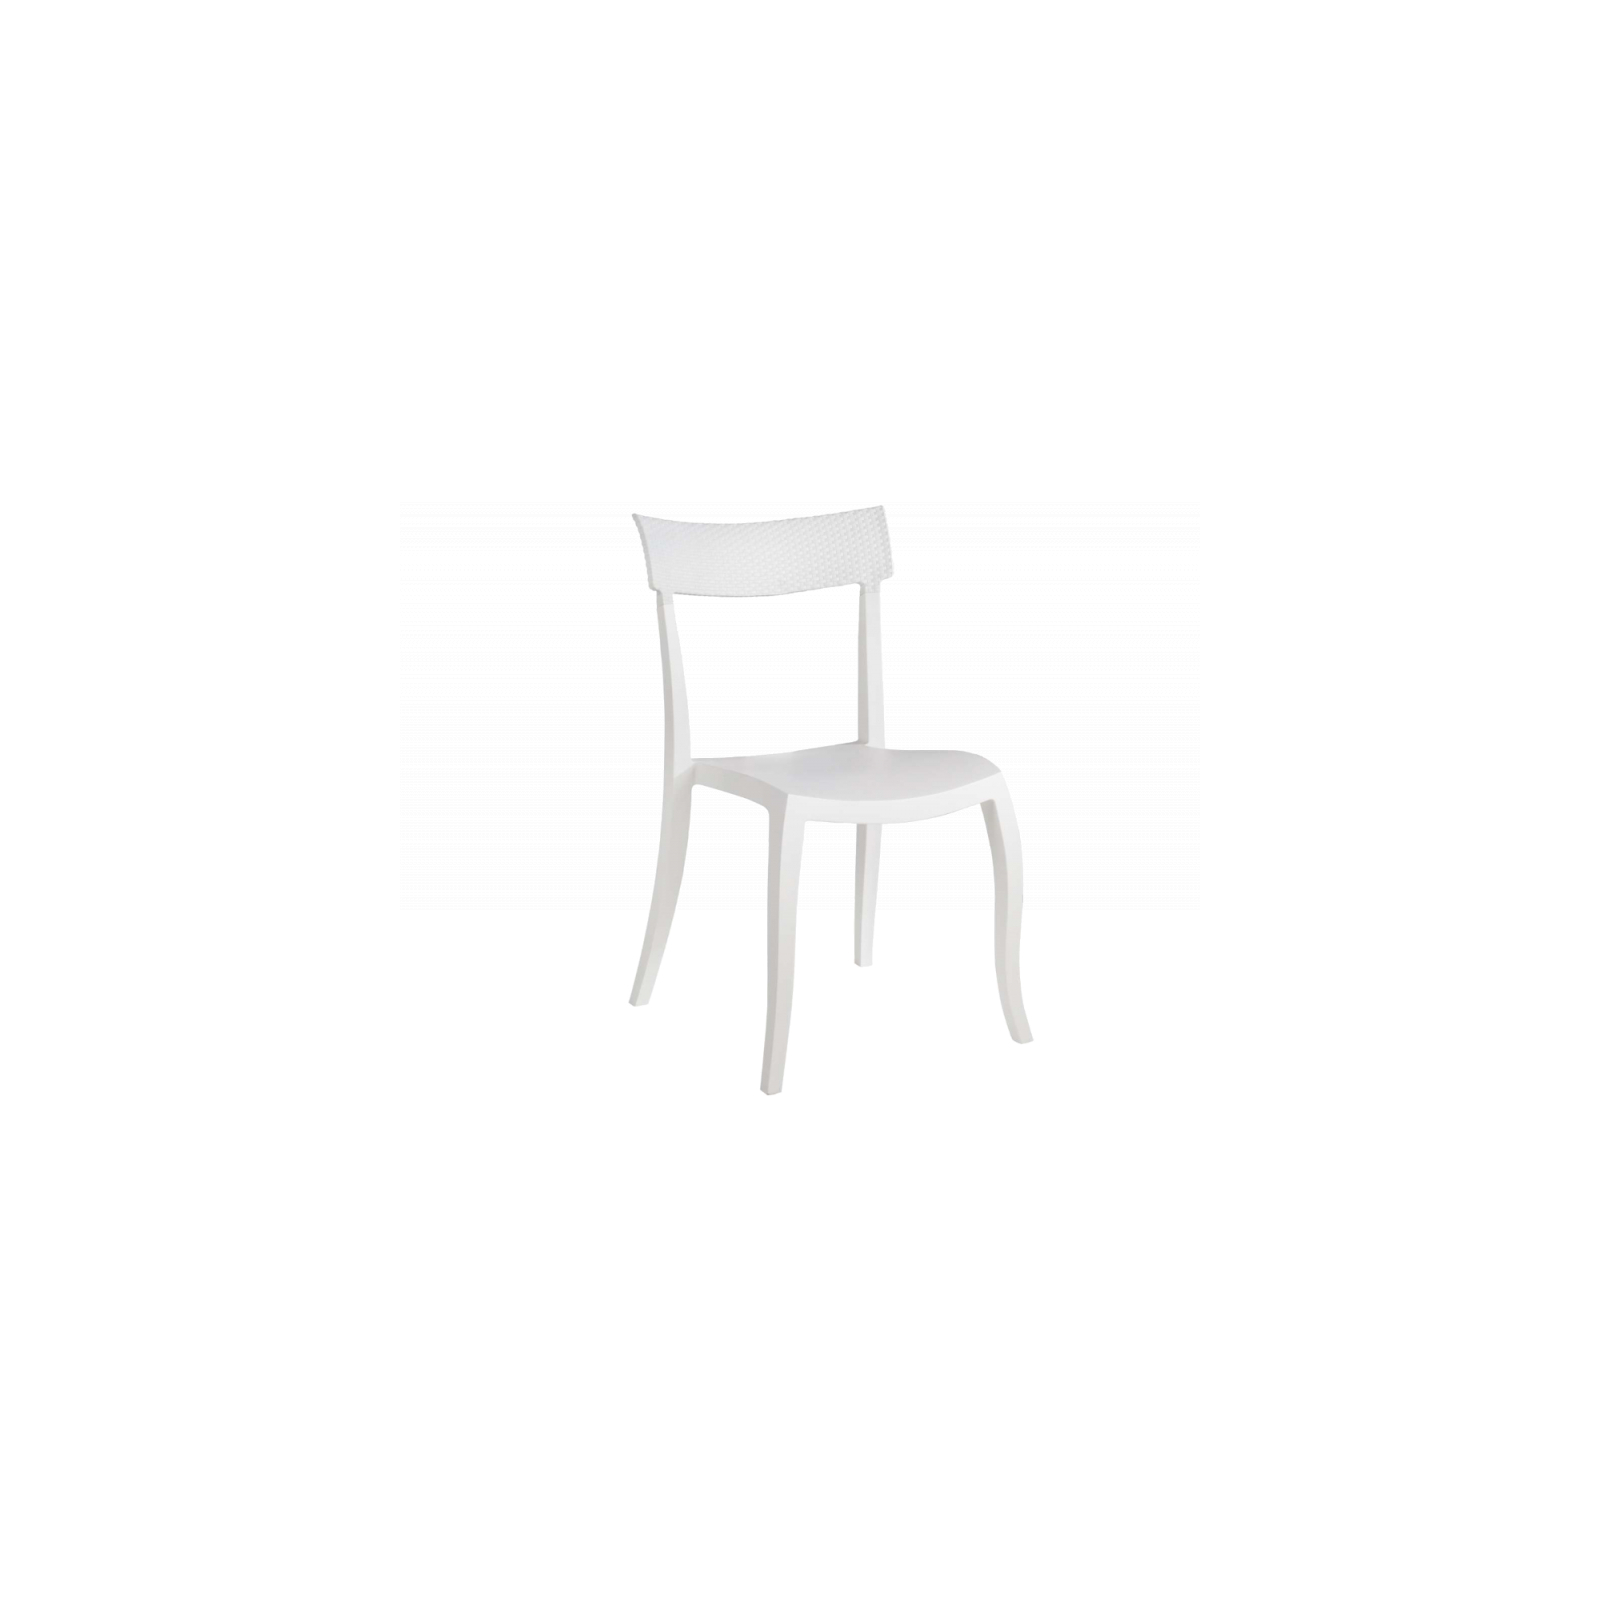 Кухонный стул PAPATYA hera sp под ротанг белый (2247)